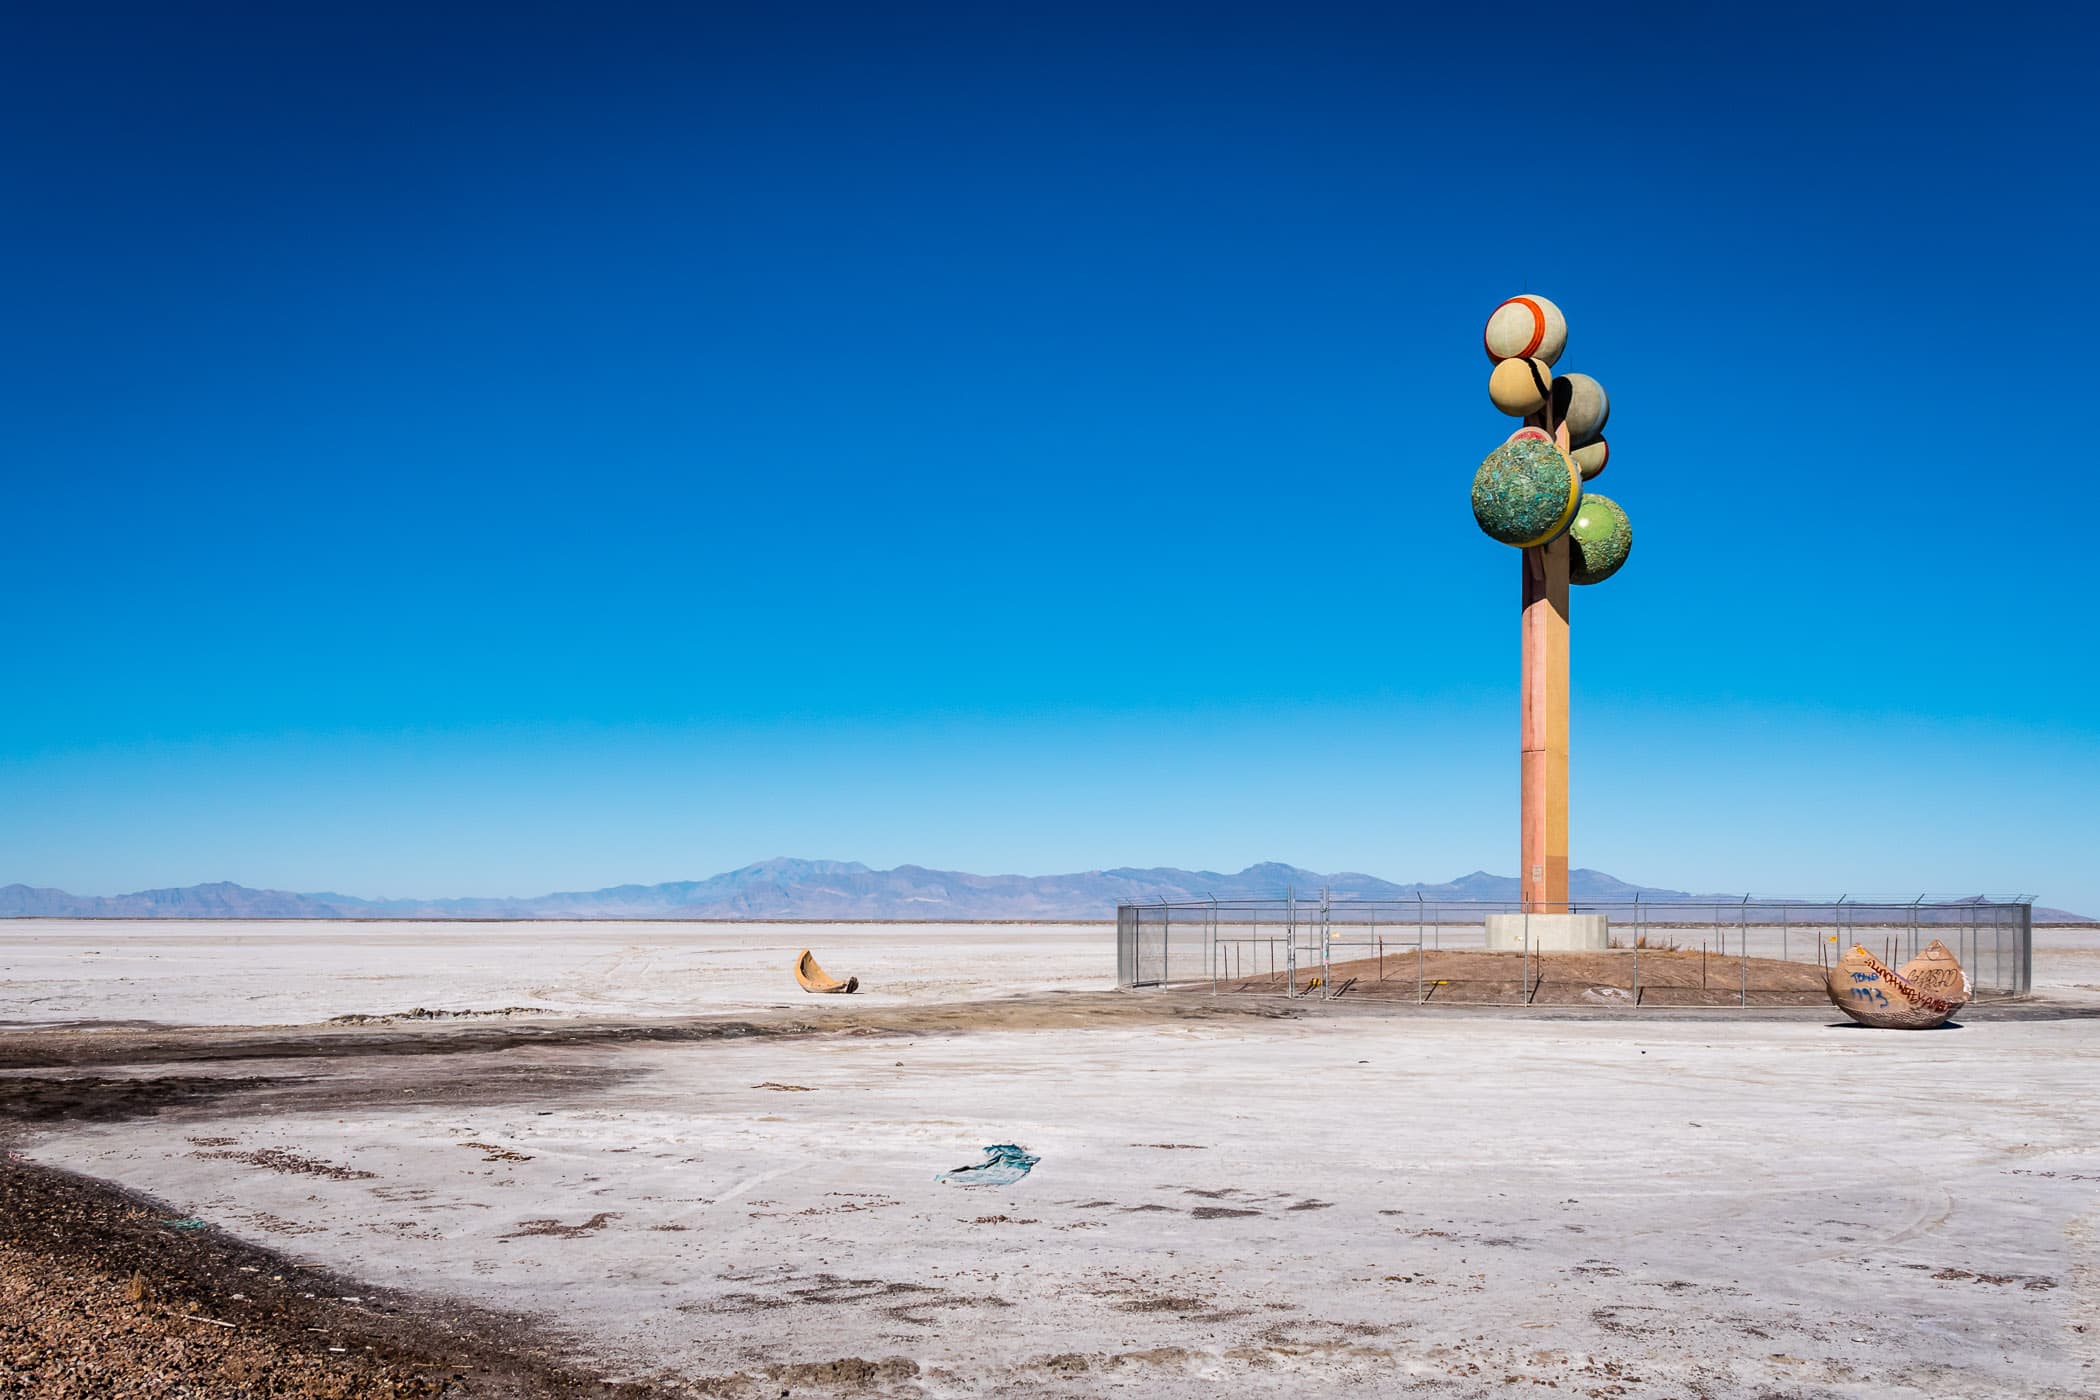 Swedish sculptor Karl Momen's 87-foot-tall Metaphor: The Tree of Utah rises over the desolate emptiness of Utah's Bonneville Salt Flats.